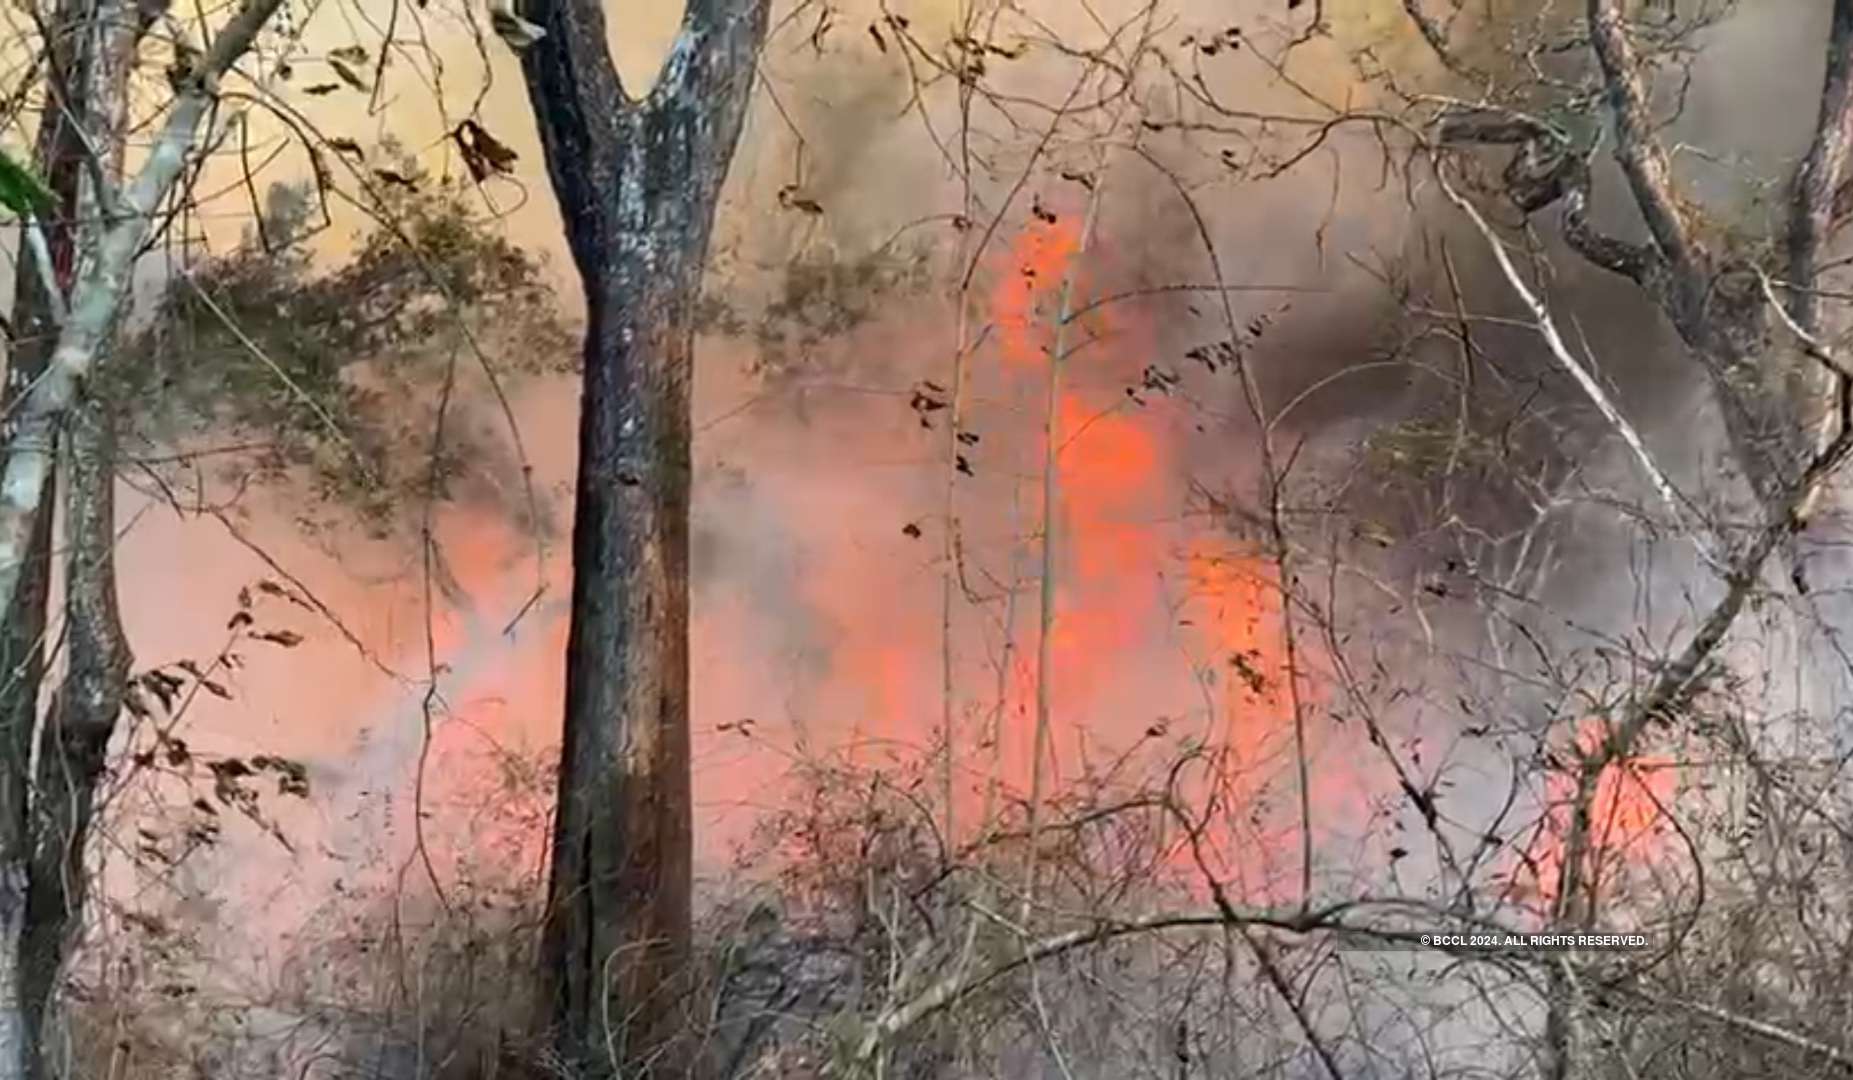 Wildfire rages through Nagarahole Reserve